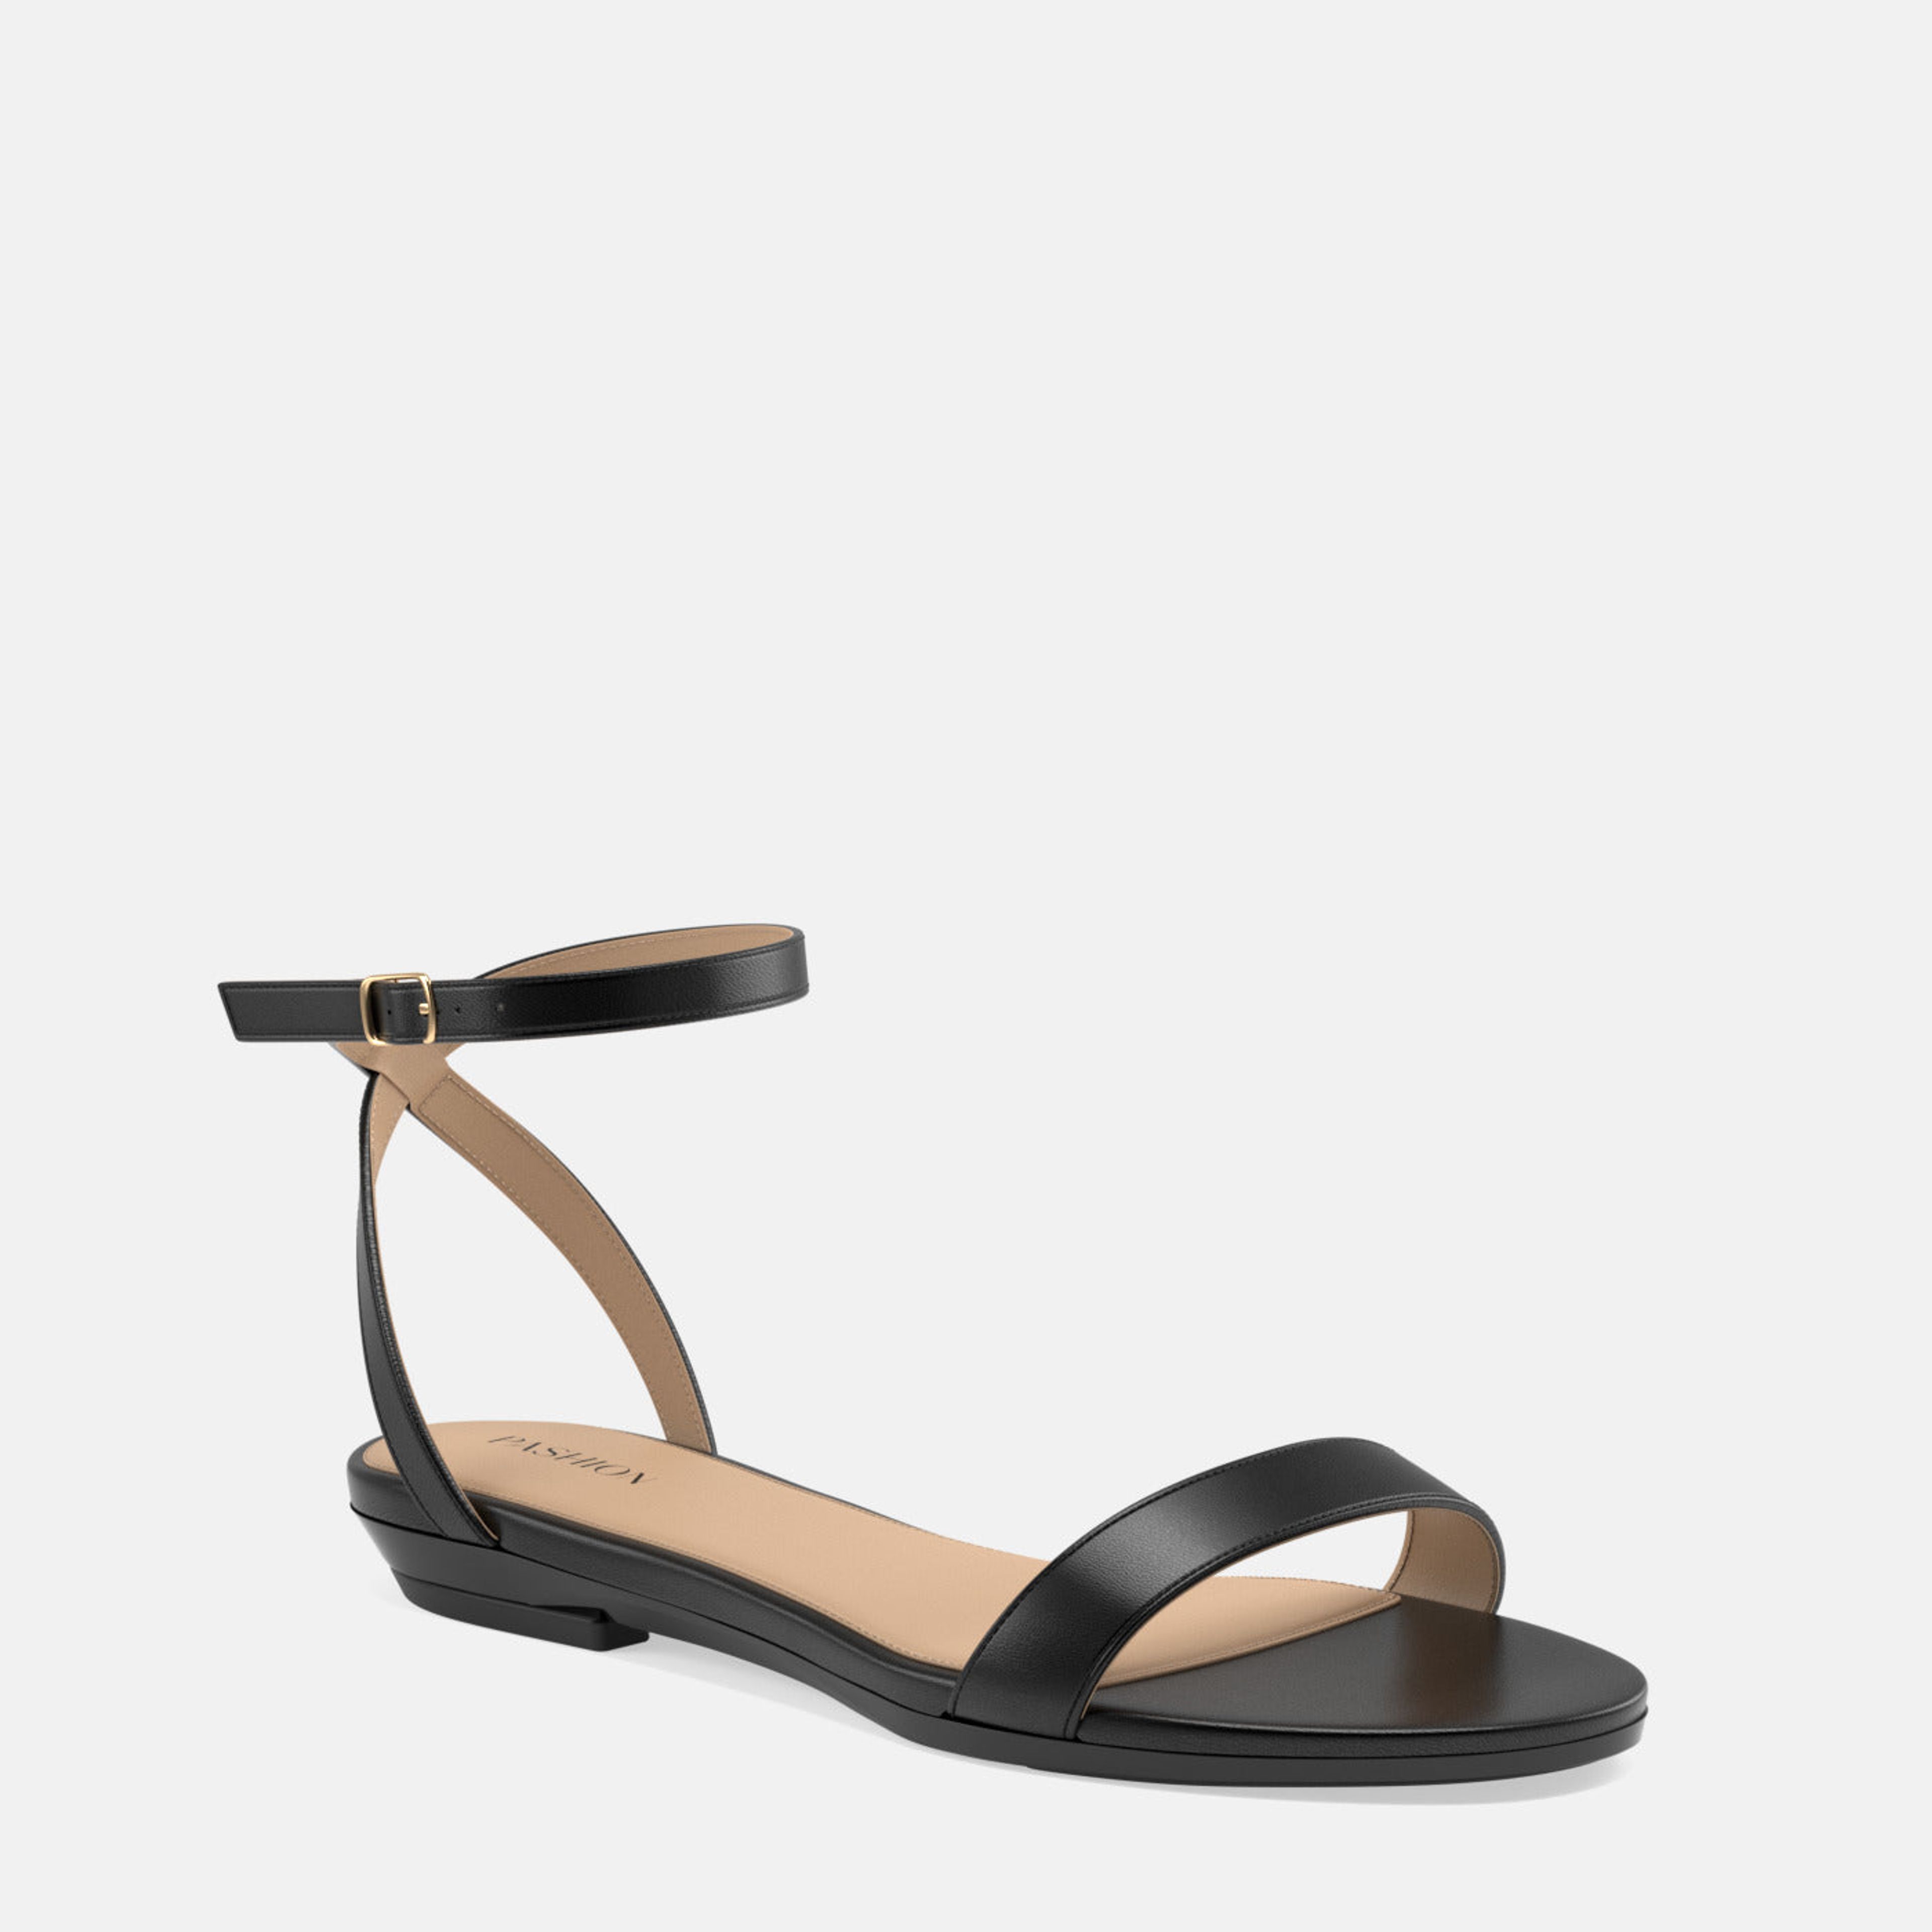 Pashion Footwear The Brenna - Sand Leather + Stiletto Heel Kit 3 Sand on  Marmalade